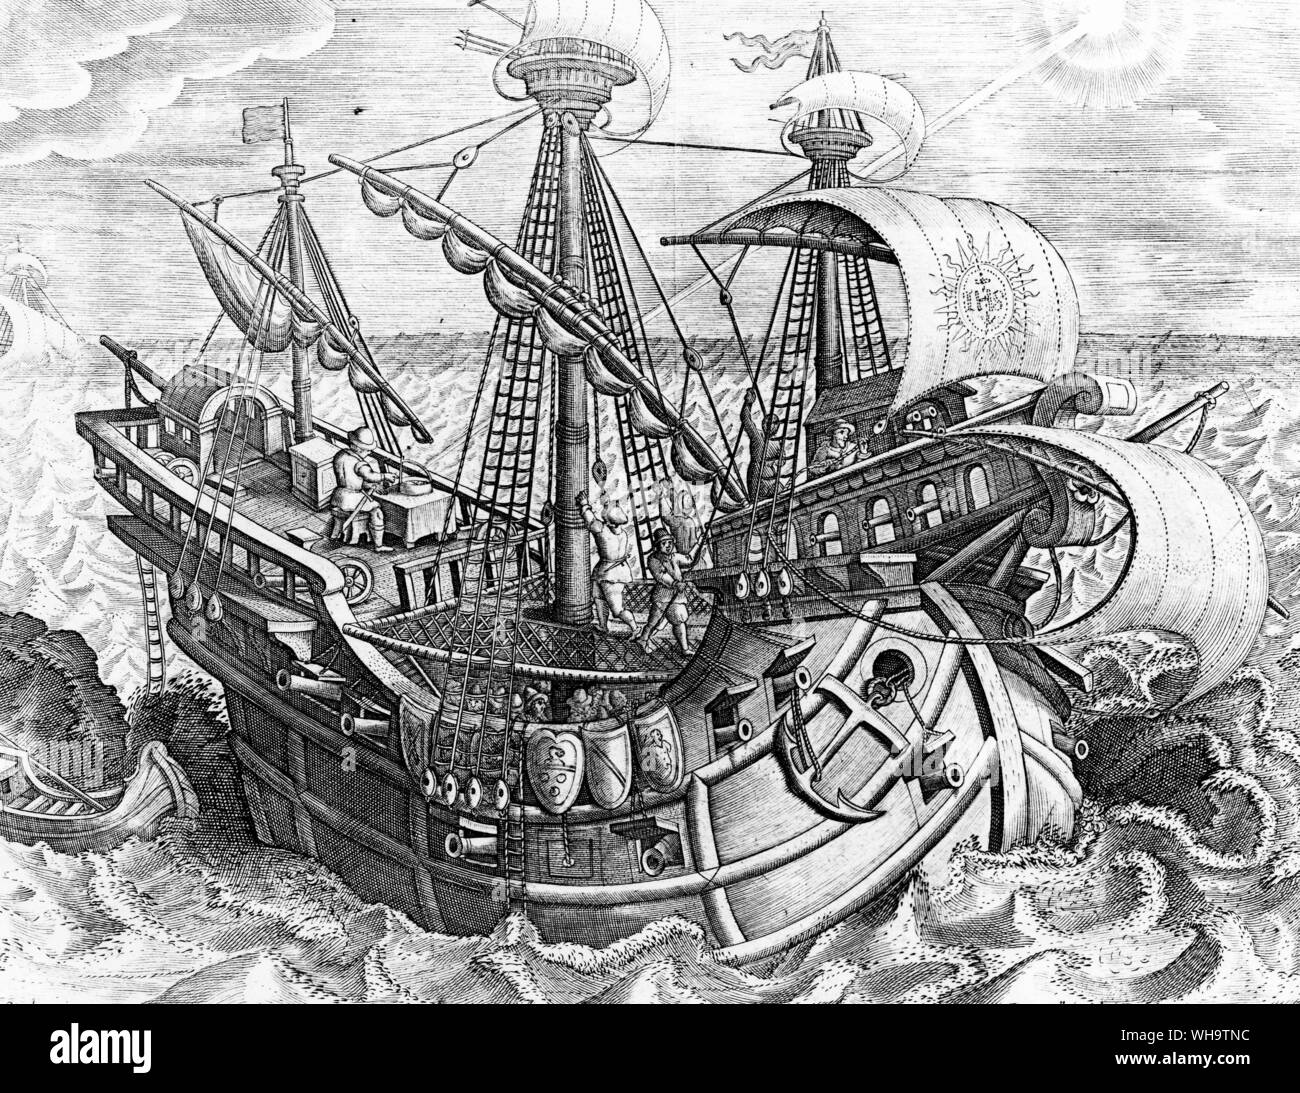 Stradom's ship, late 16th century. Stock Photo